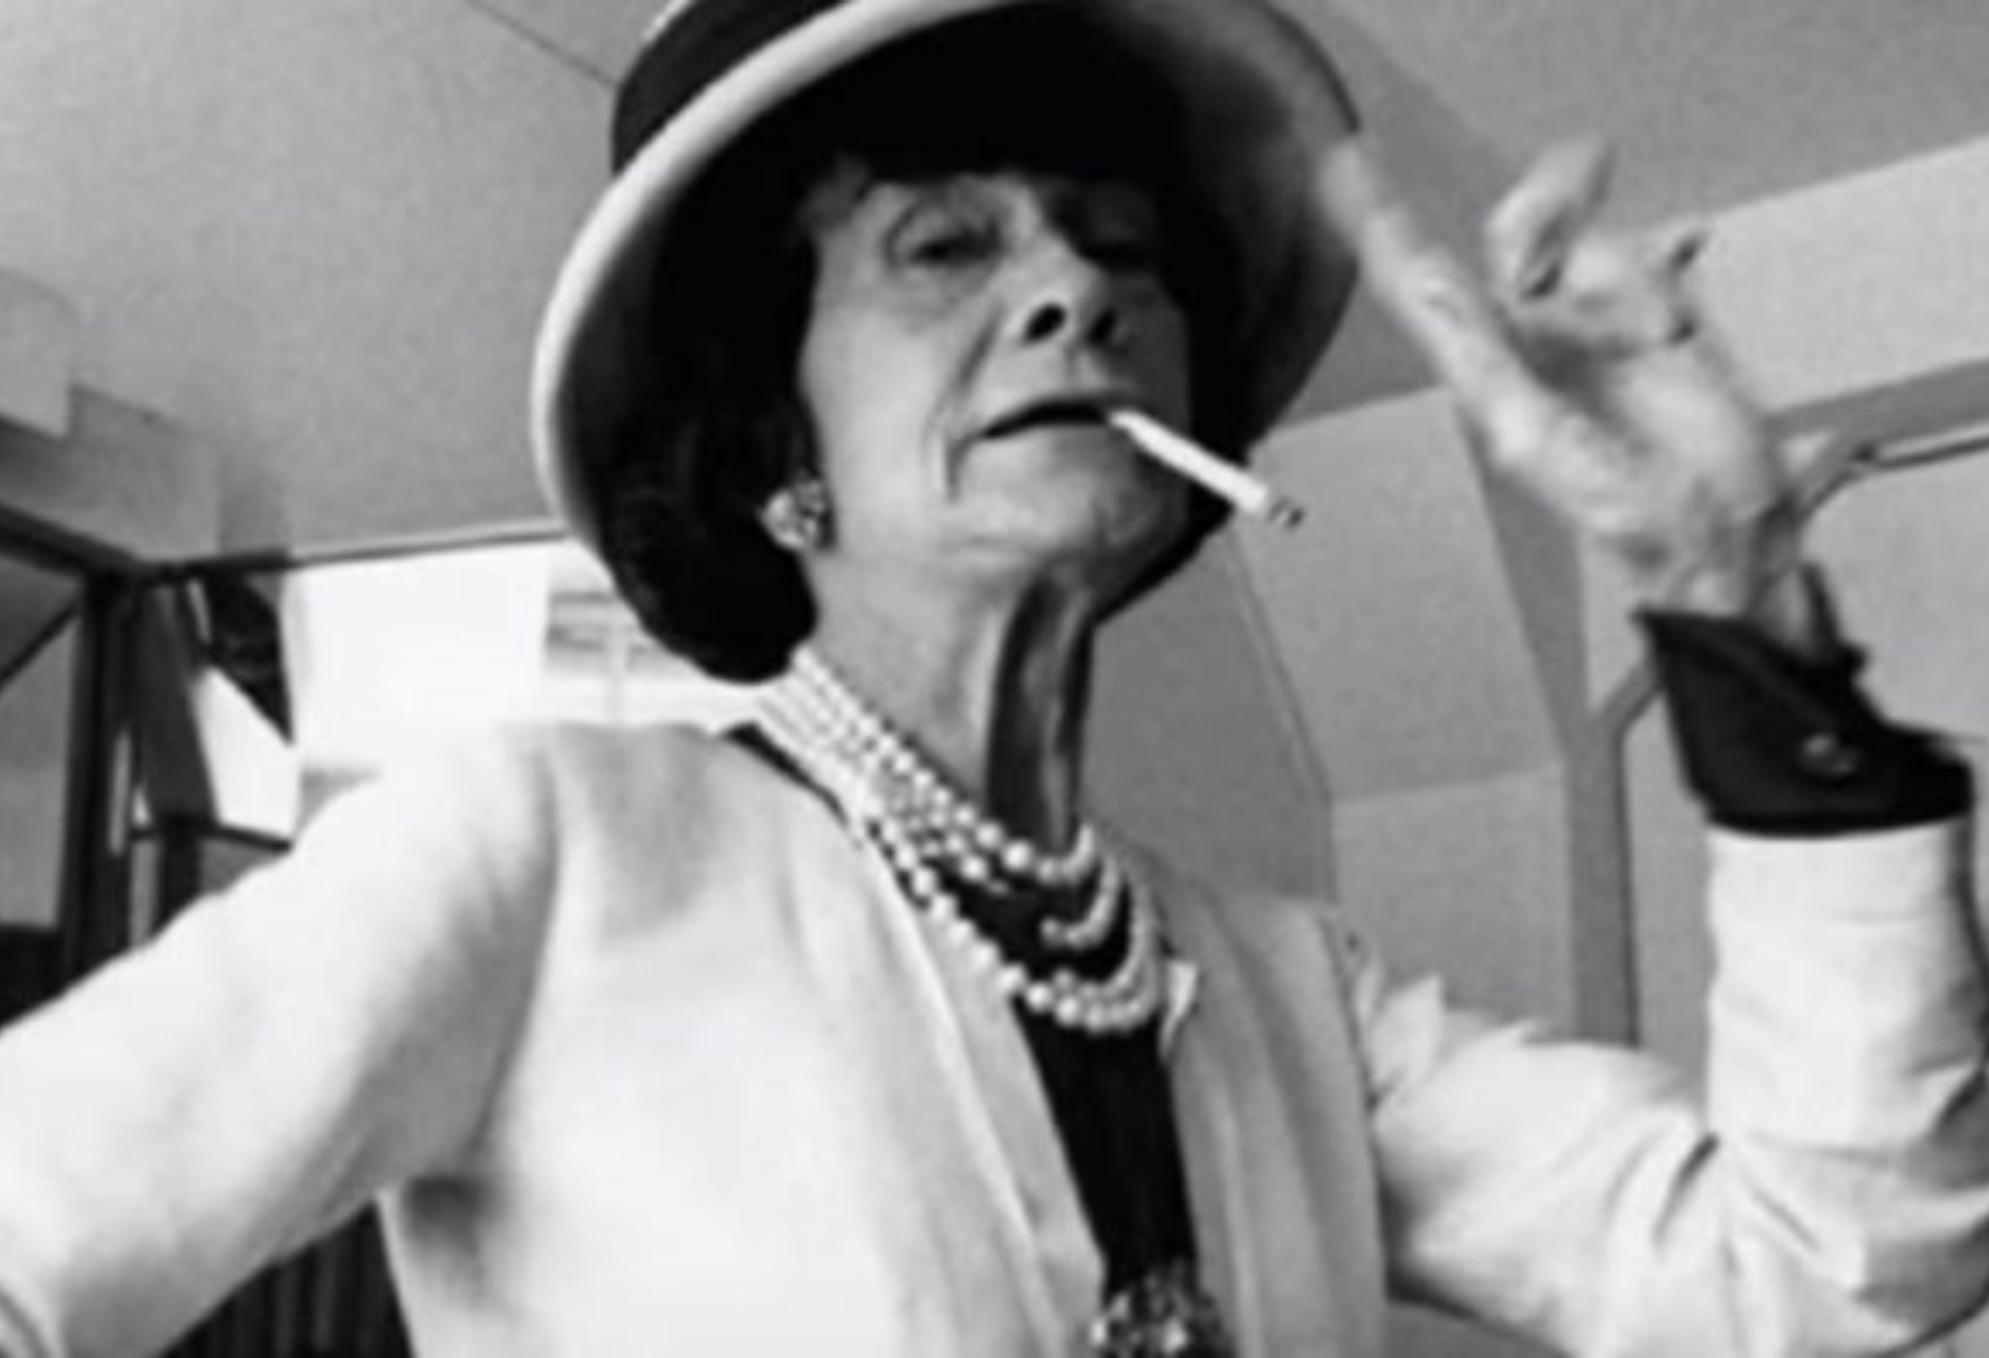 Coco Chanel: Η γυναίκα θρύλος που άλλαξε την ιστορία της μόδας – Η σκοτεινή παιδική ηλικία η θυελλώδης προσωπική ζωή και η μεγαλειώδης καριέρα